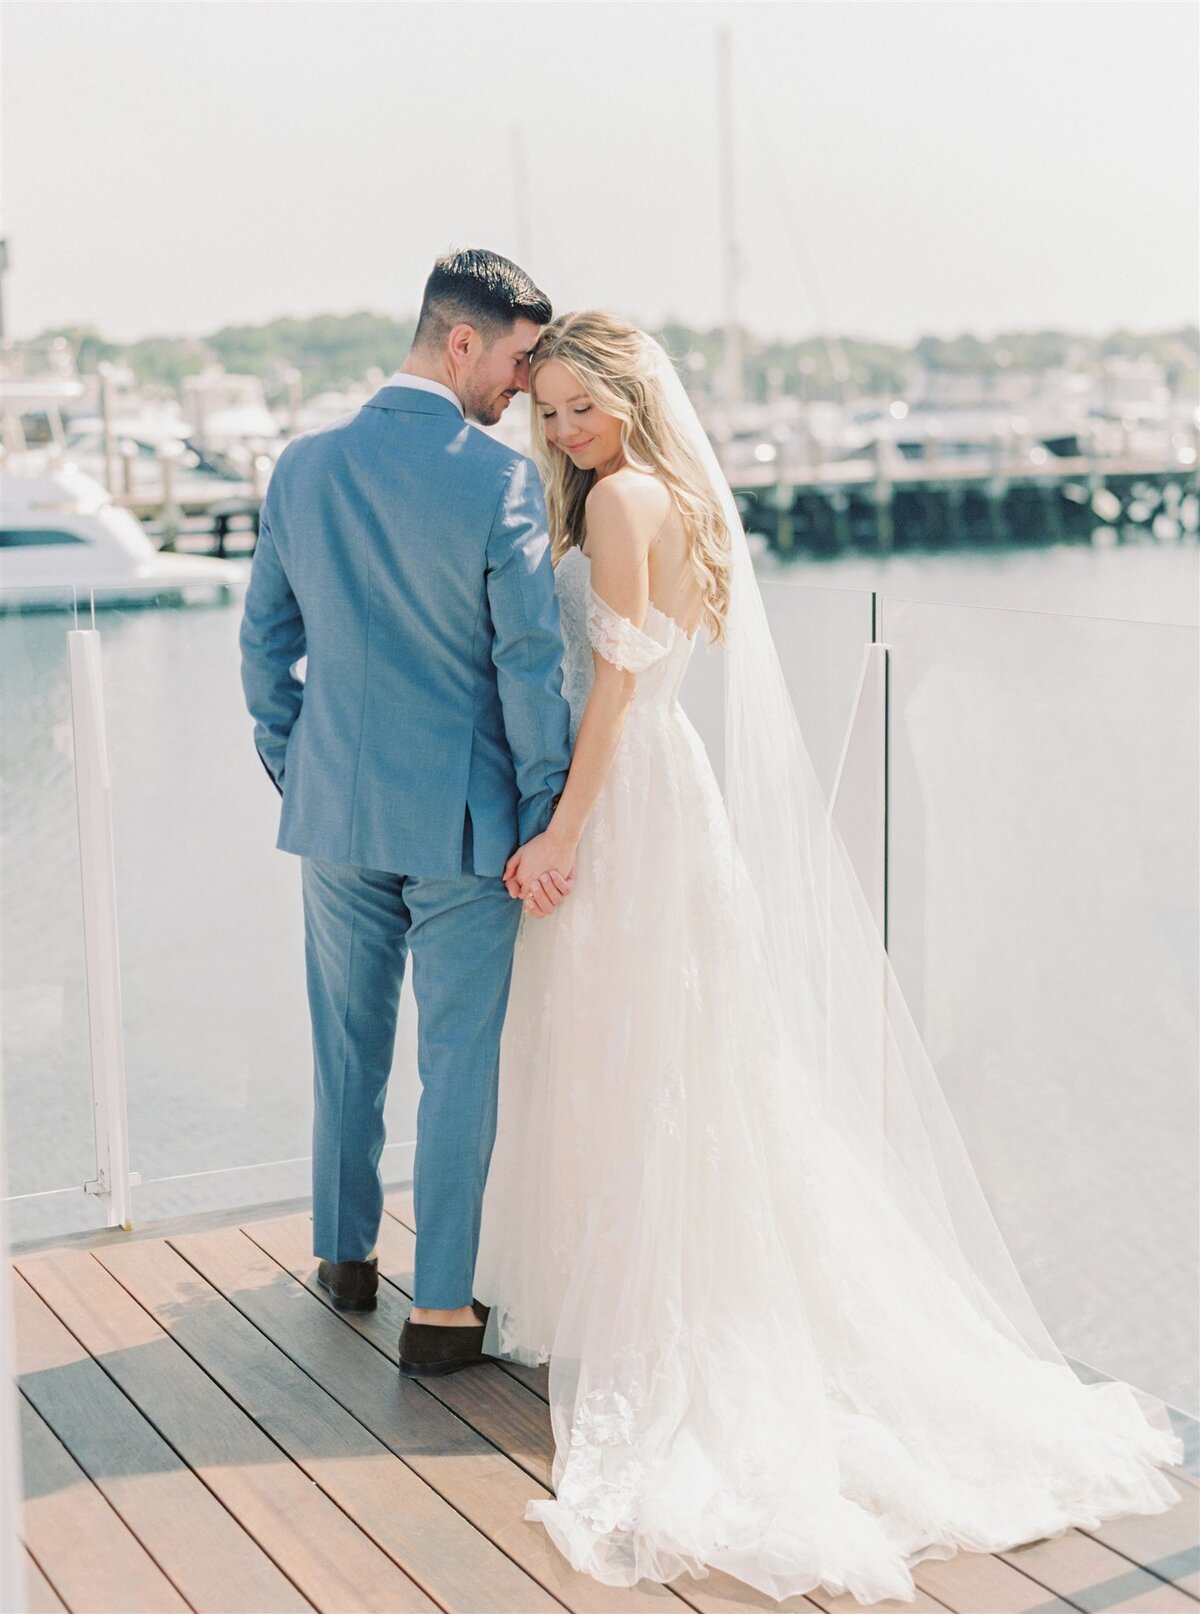 Kate-Murtaugh-Events-Newport-RI-bride-groom-wedding-planner-coastal-first-look